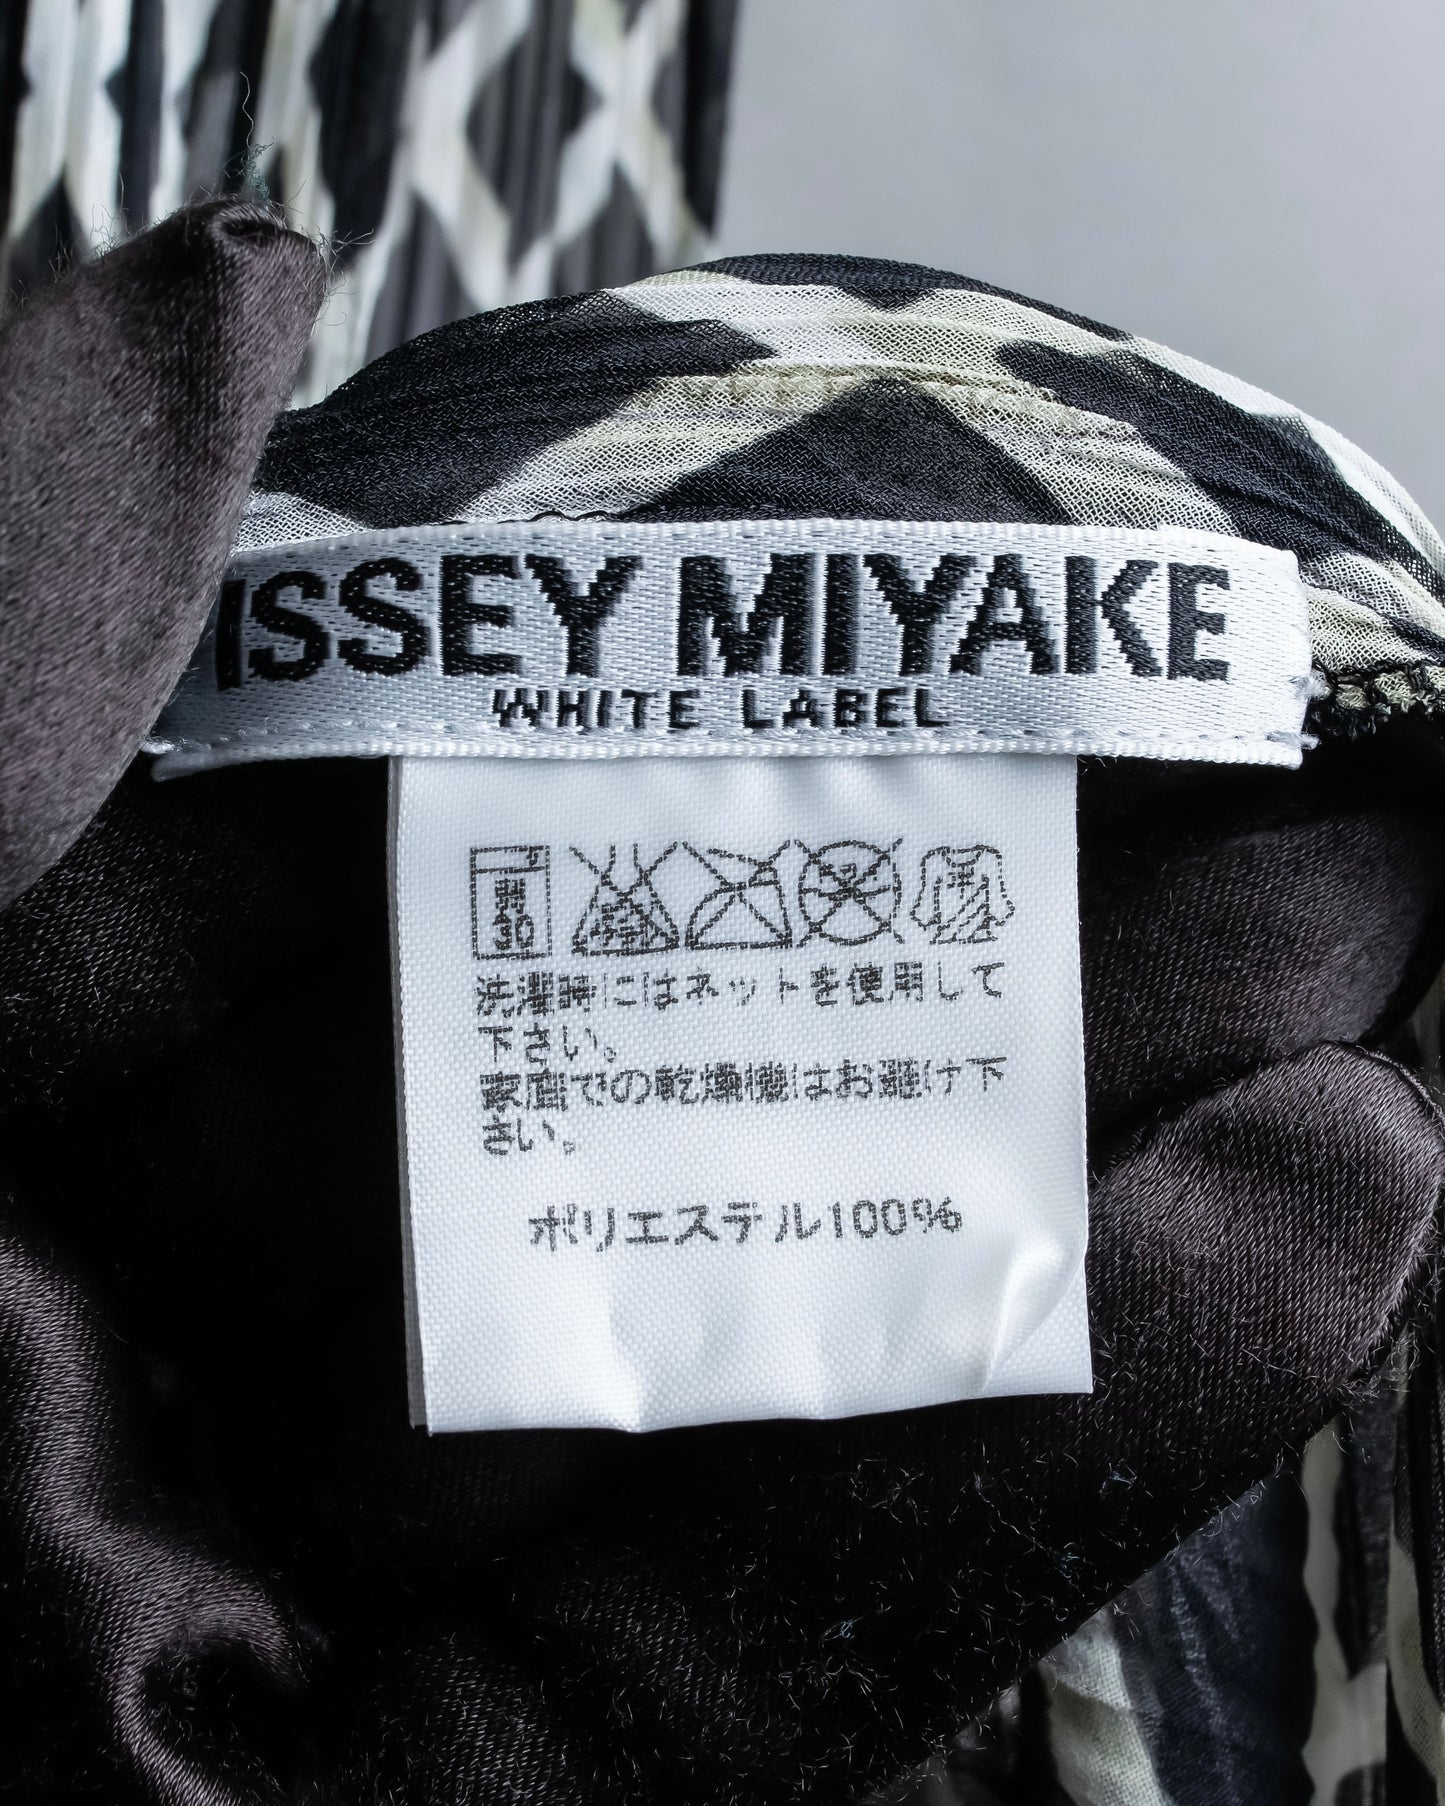 "ISSEY MIYAKE White label"
Tailcoat design sleeveless dress